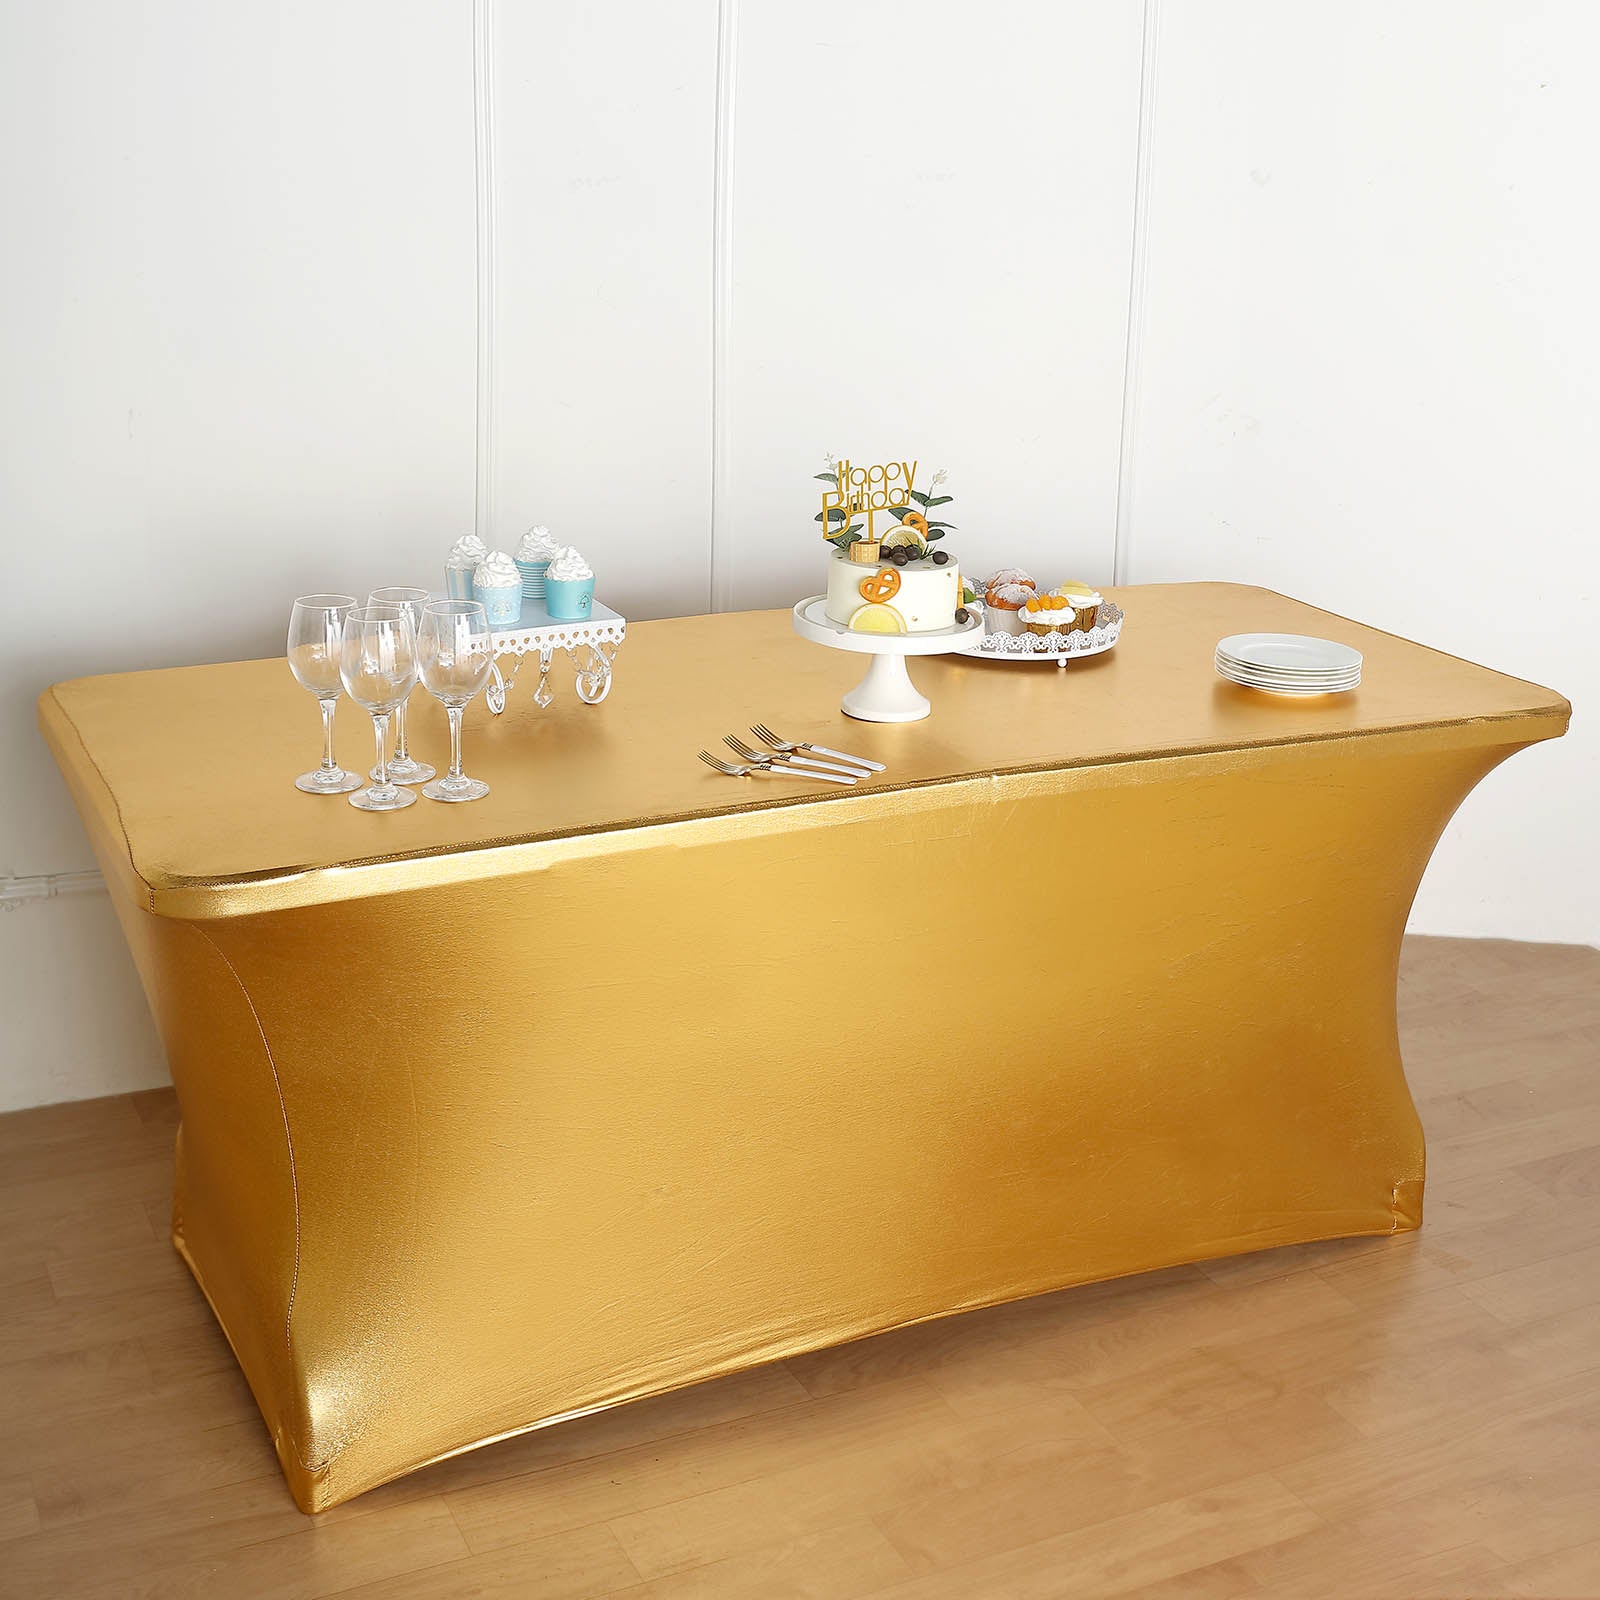 6ft Gold Rectangular Spandex Table Cover | eFavormart.com